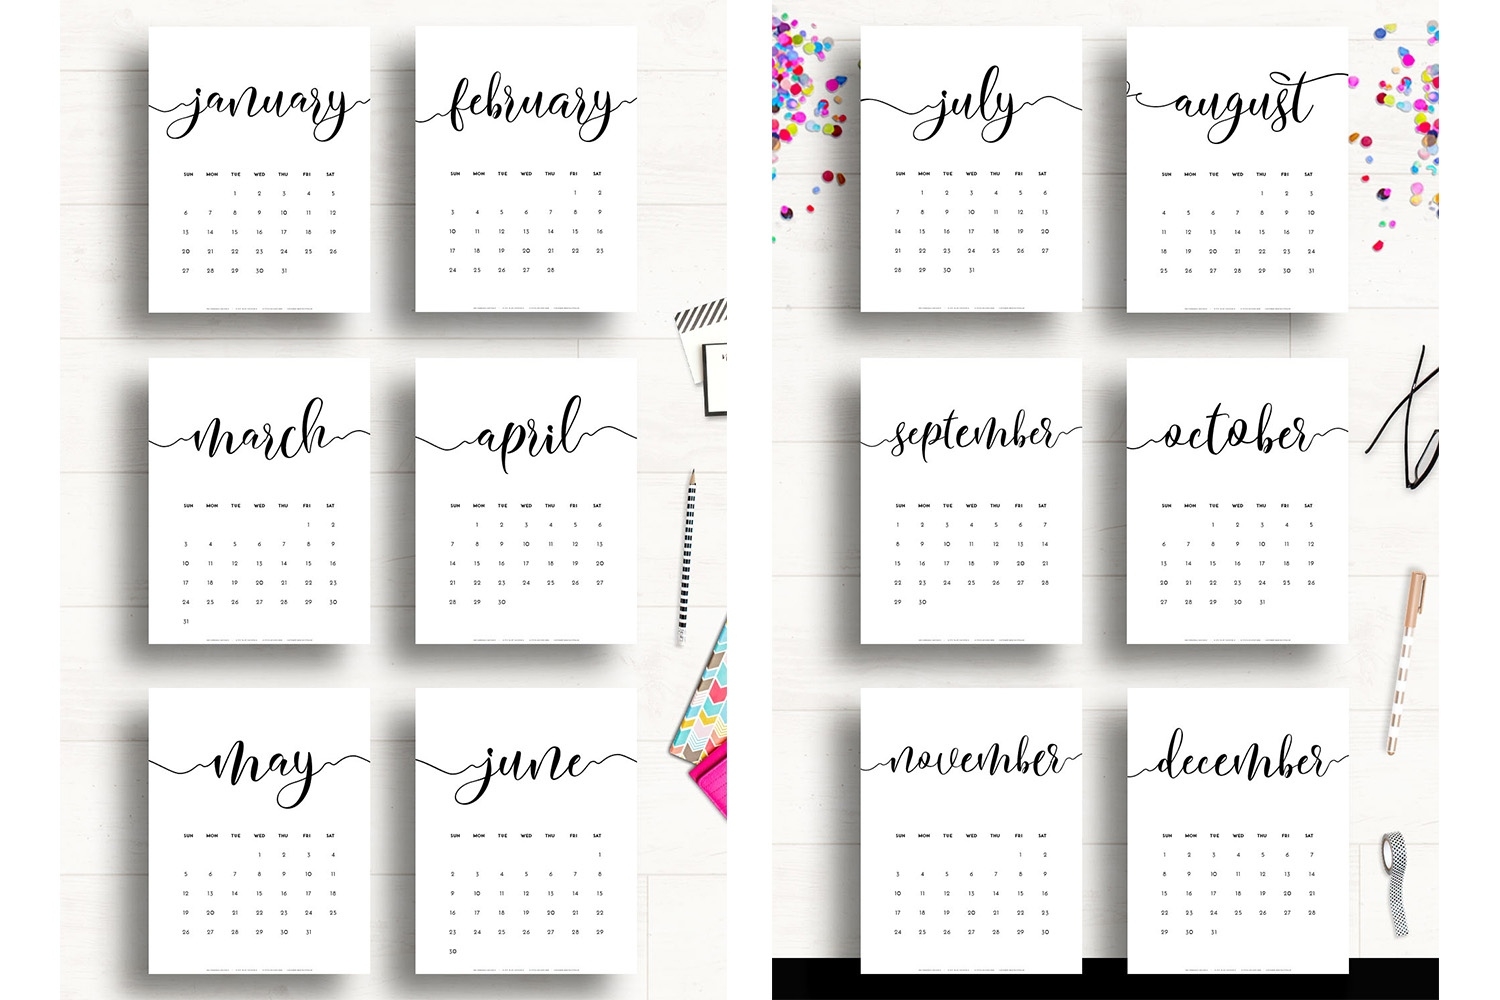 2019 Printable Wall Calendar A3 A4 A5 Us Letter A3 Wall Calendar Printing